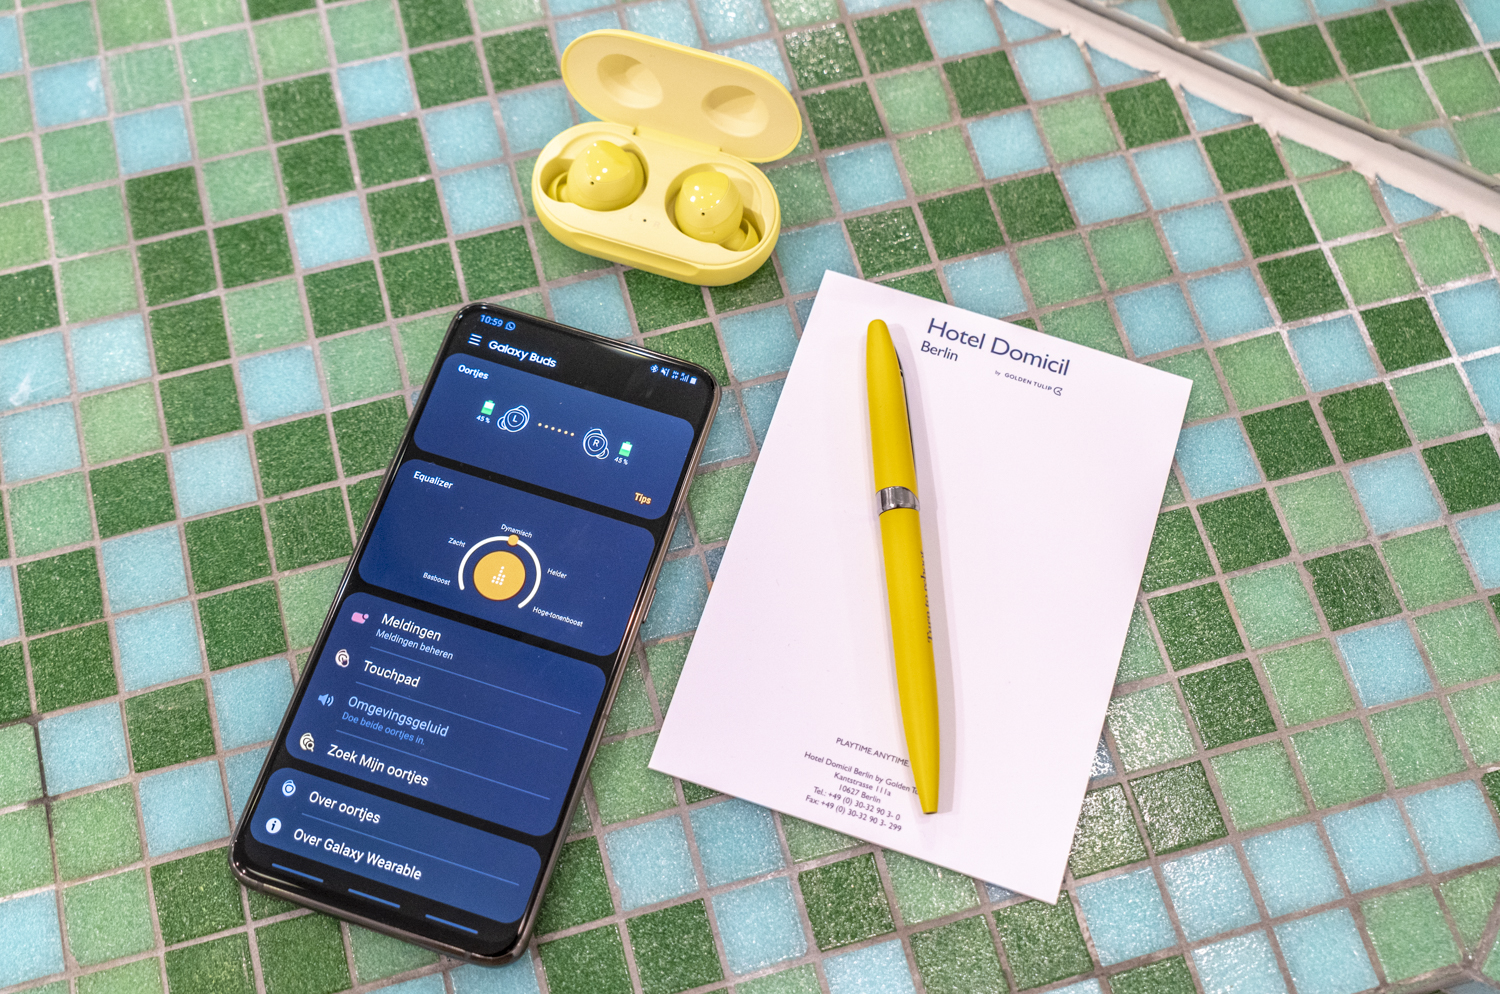 Samsung Galaxy Buds review app